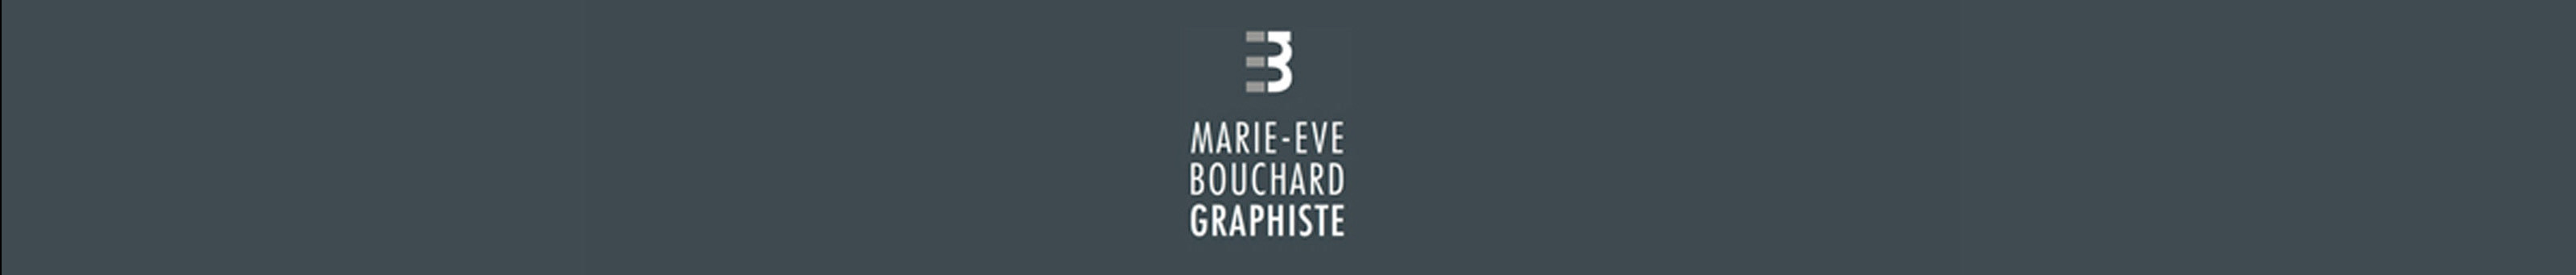 Marie-Eve Bouchard のプロファイルバナー